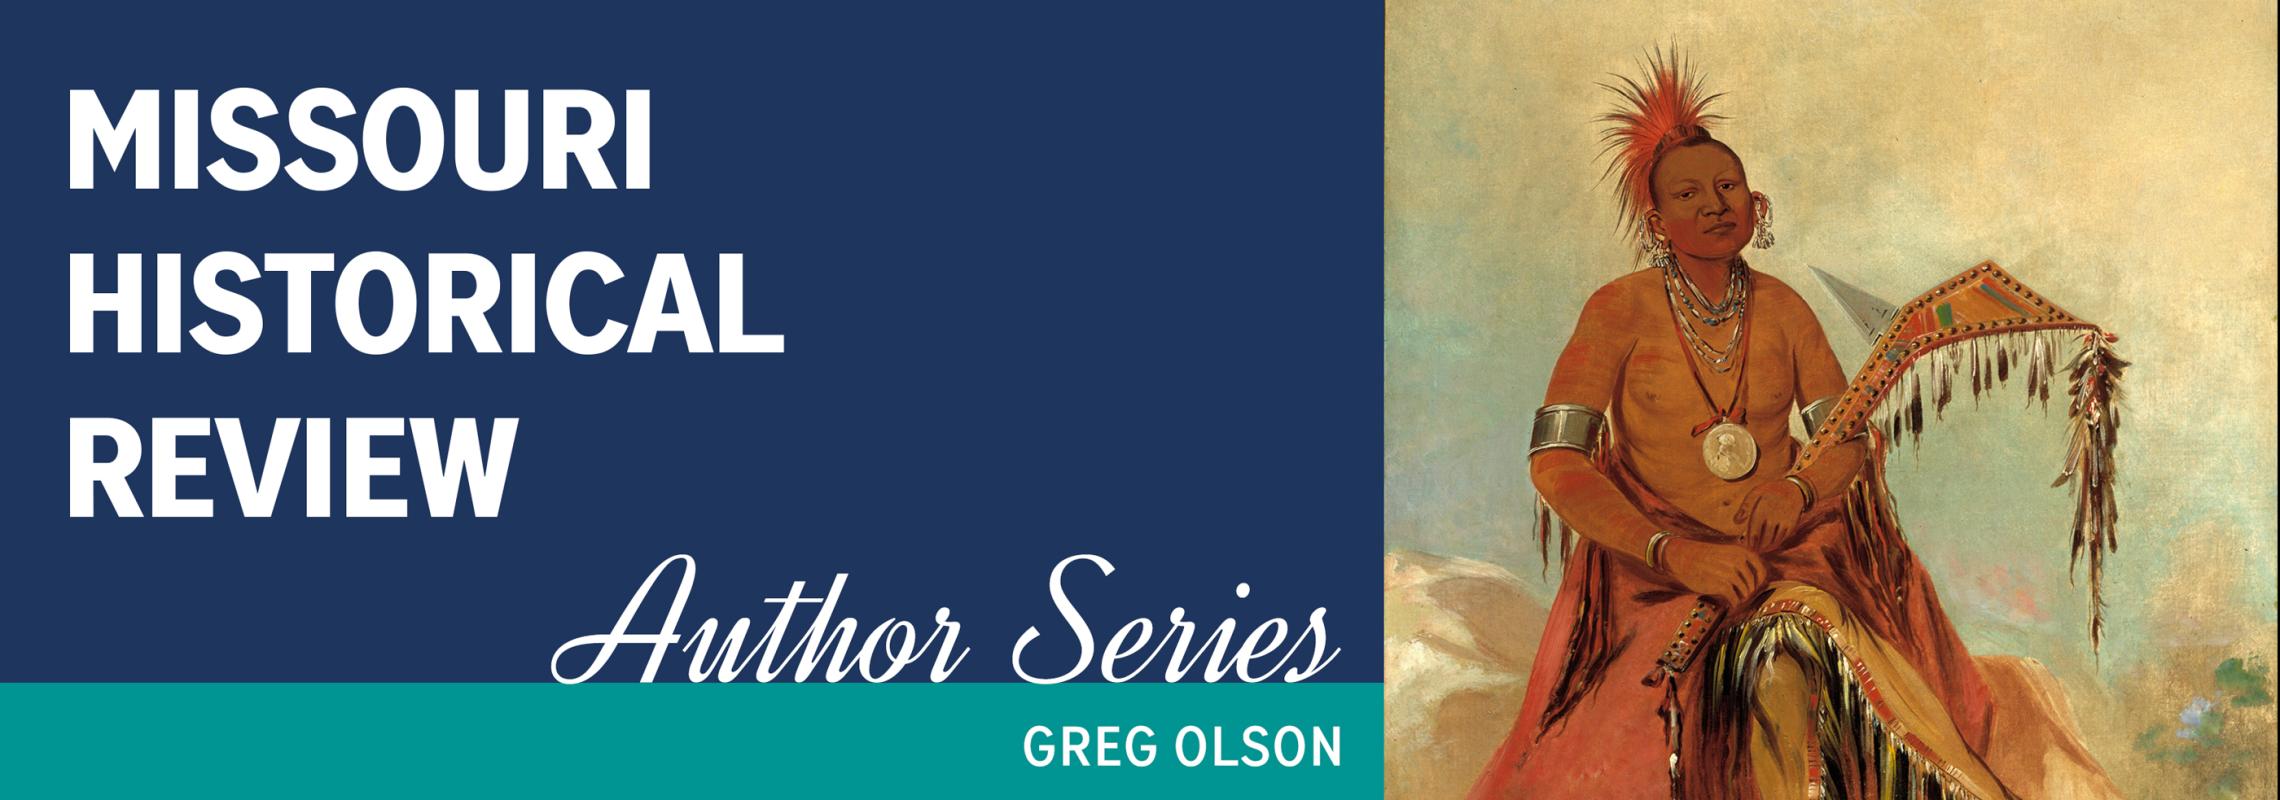 Missouri Historical Review Author Series